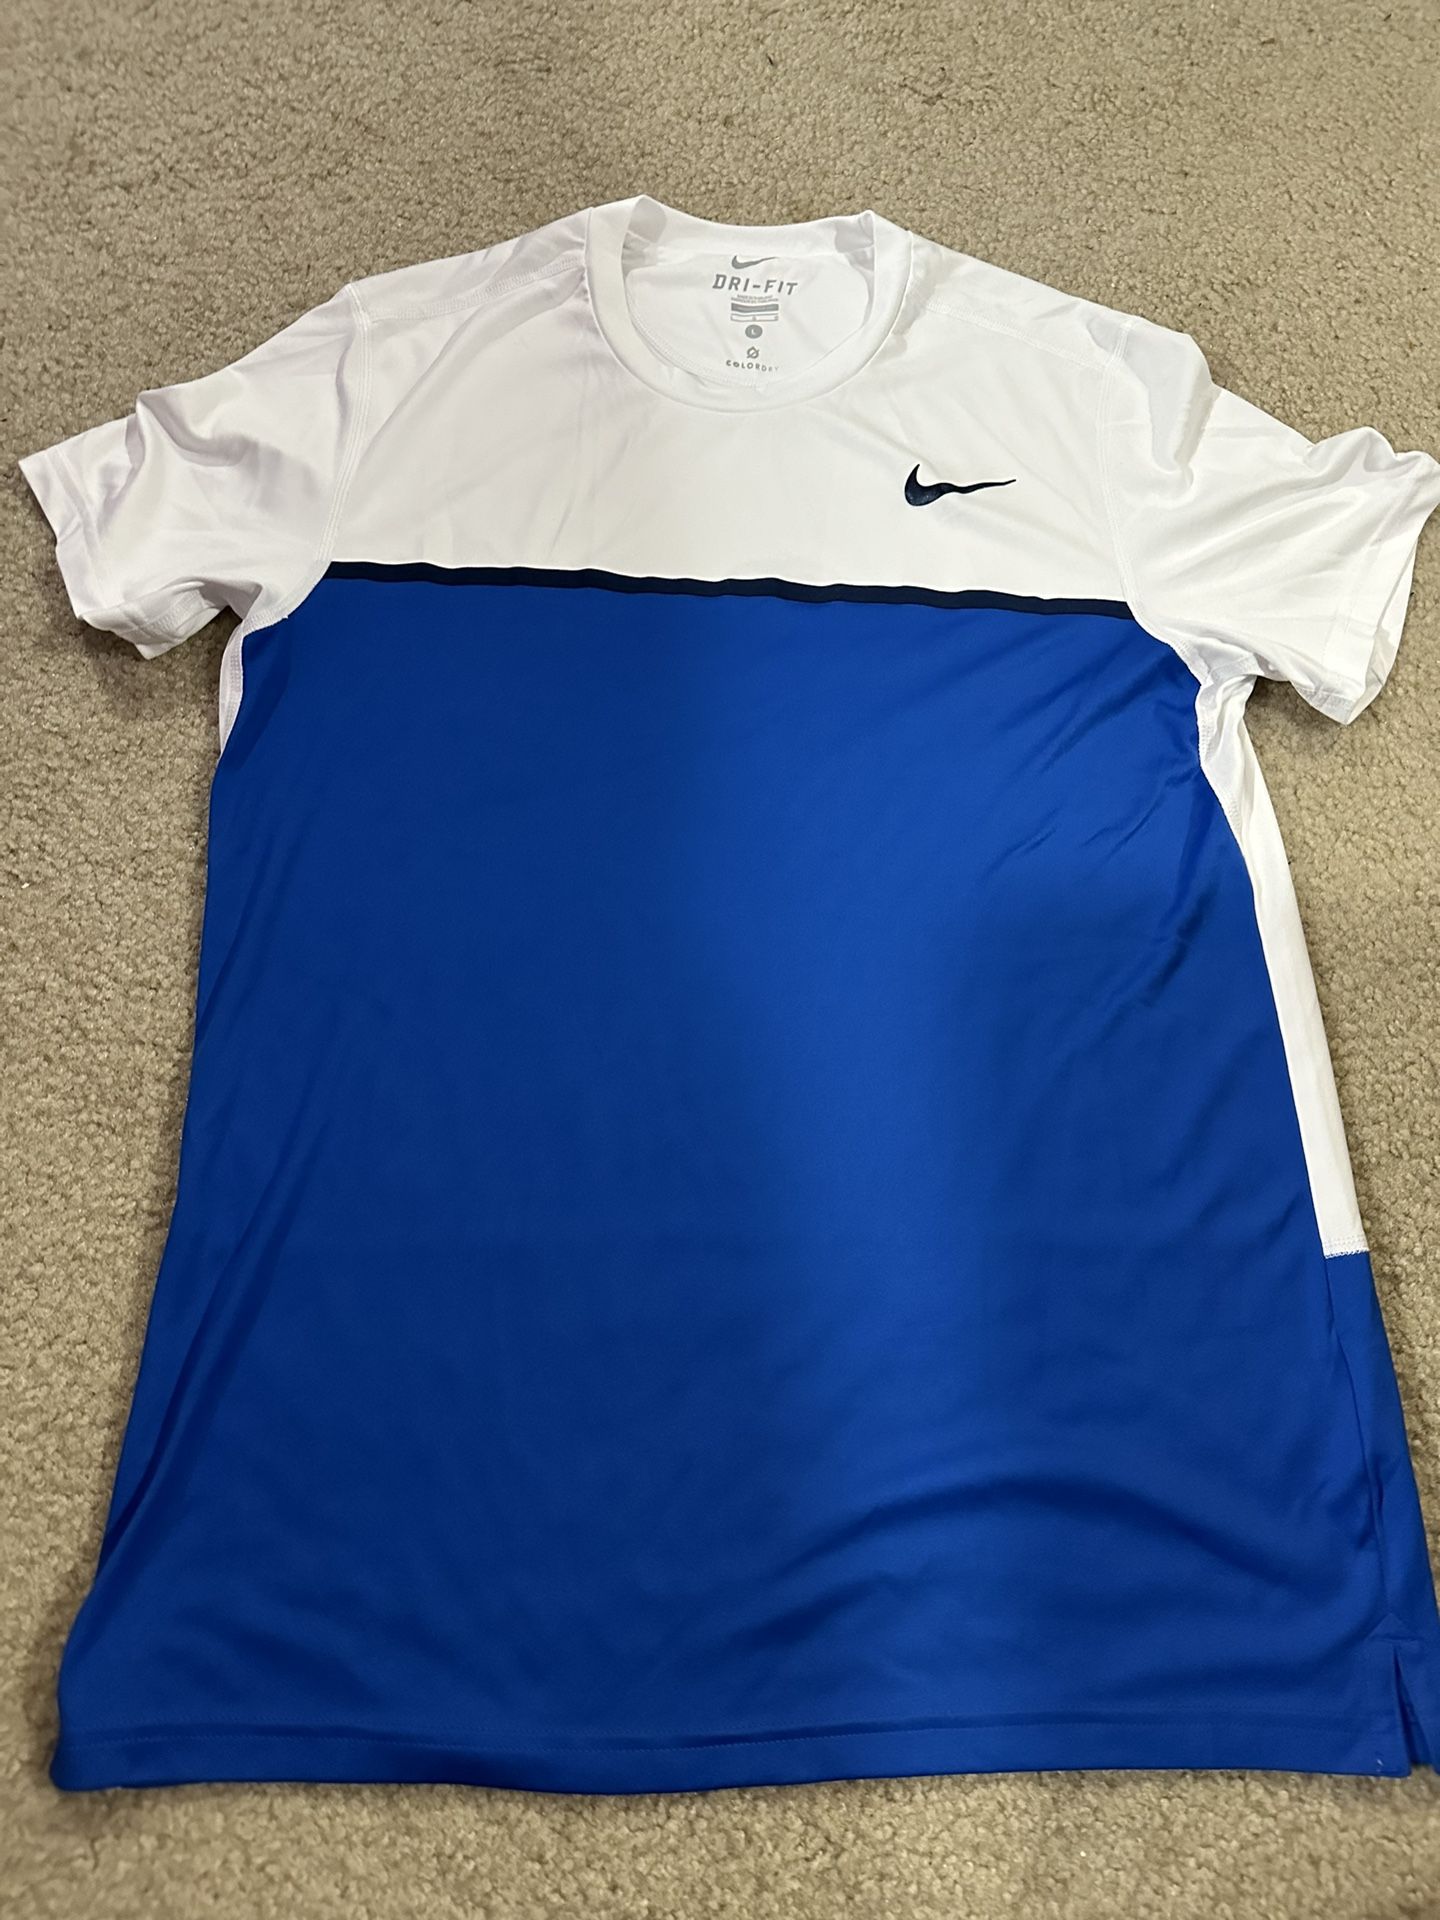 Men’s Nike Dry Fit T-Shirt